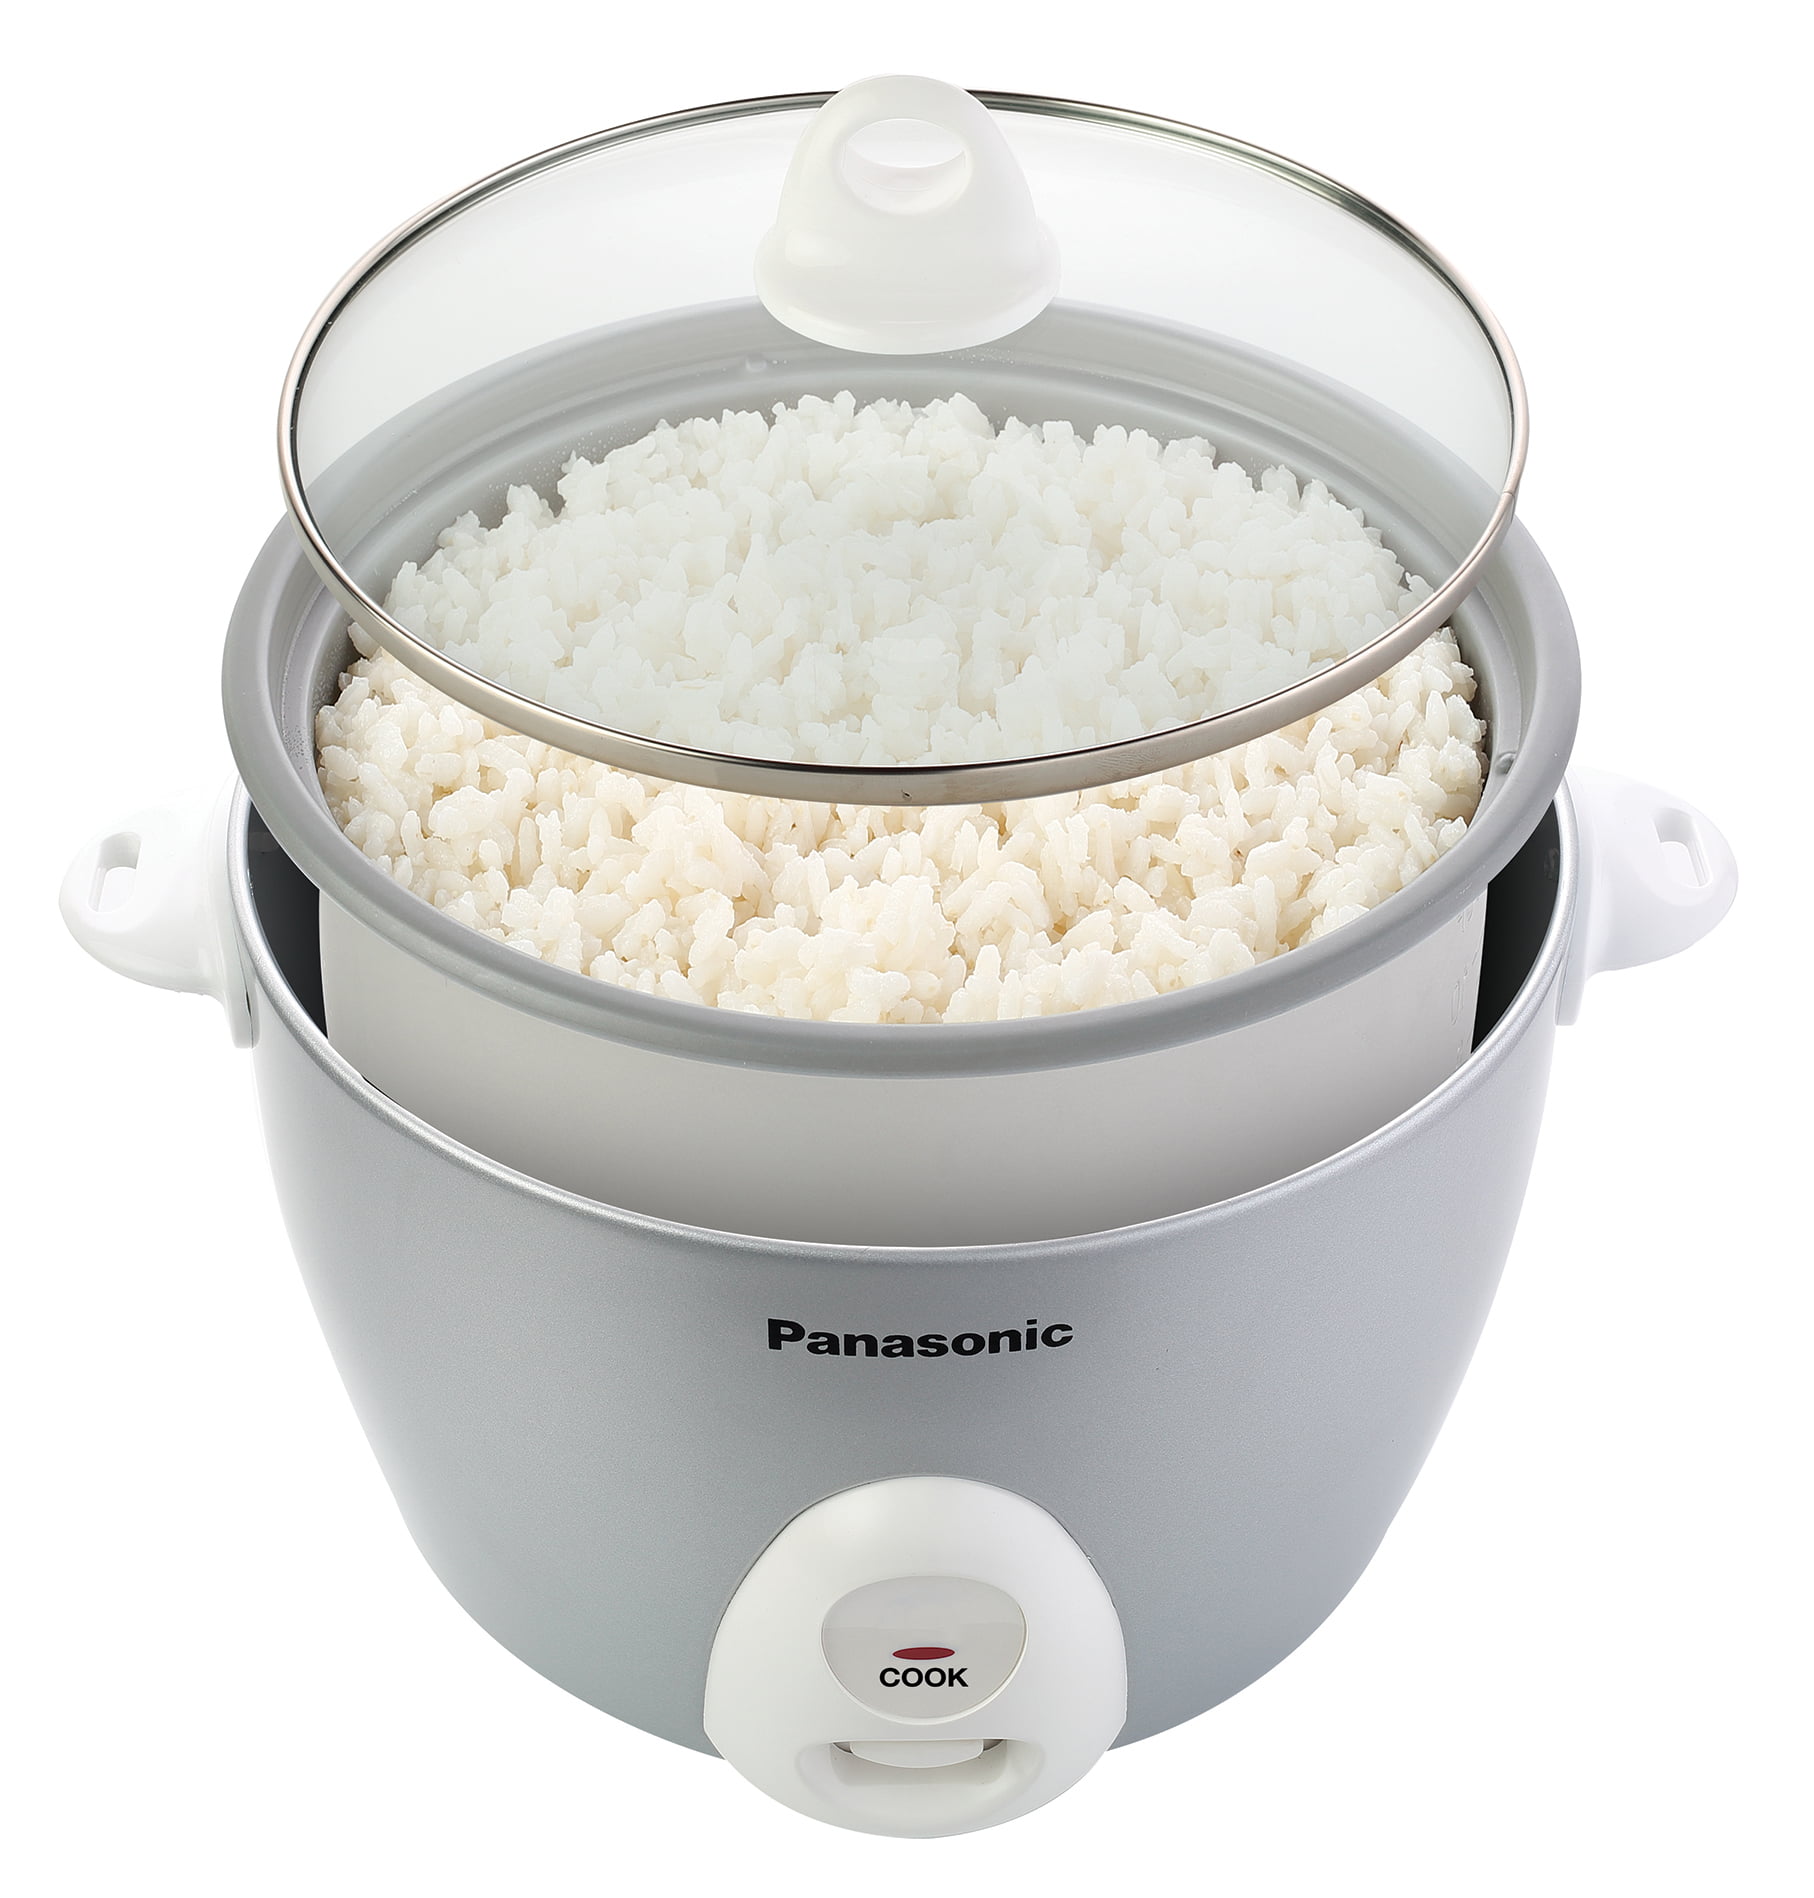 Panasonic sr-g06 3-Cup Rice Cooker 220 Volt